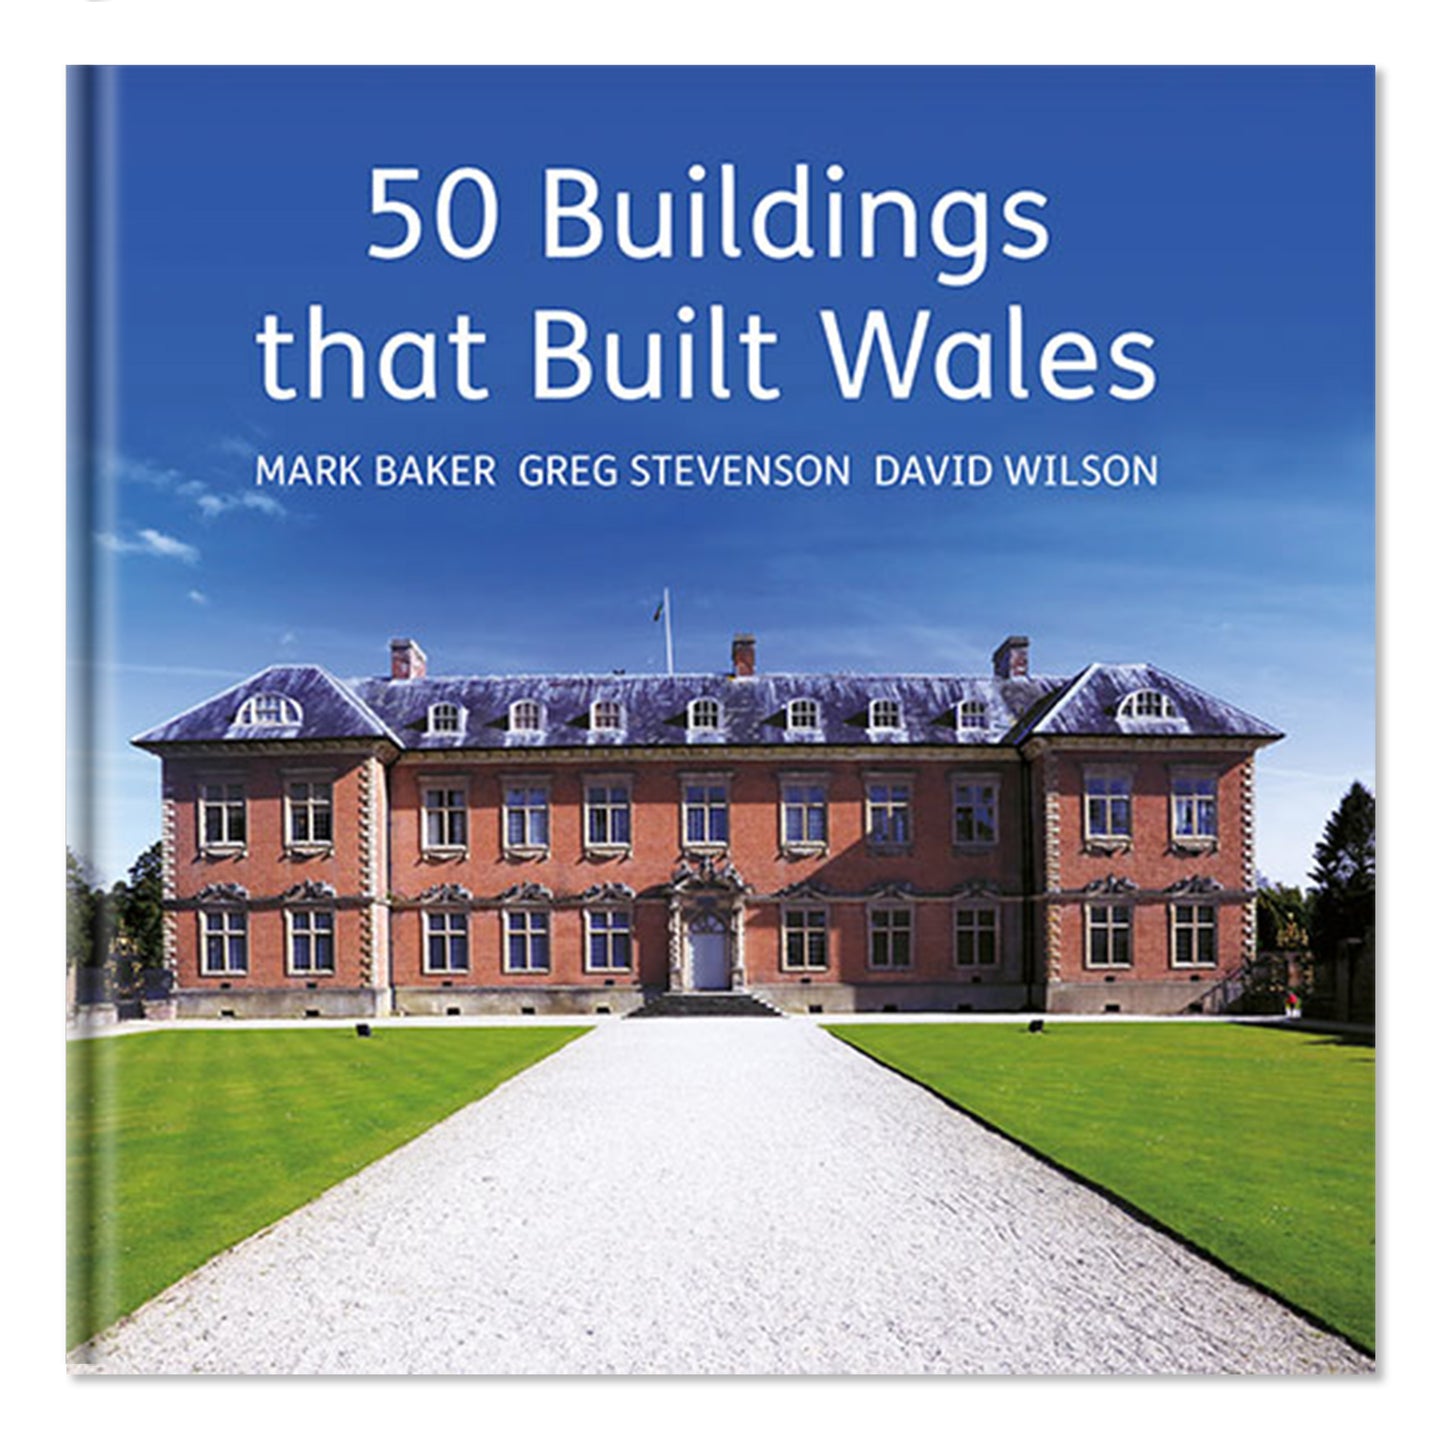 50 Buildings that Built Wales Mark Baker Greg Stevenson David Wilson published by Graffeg